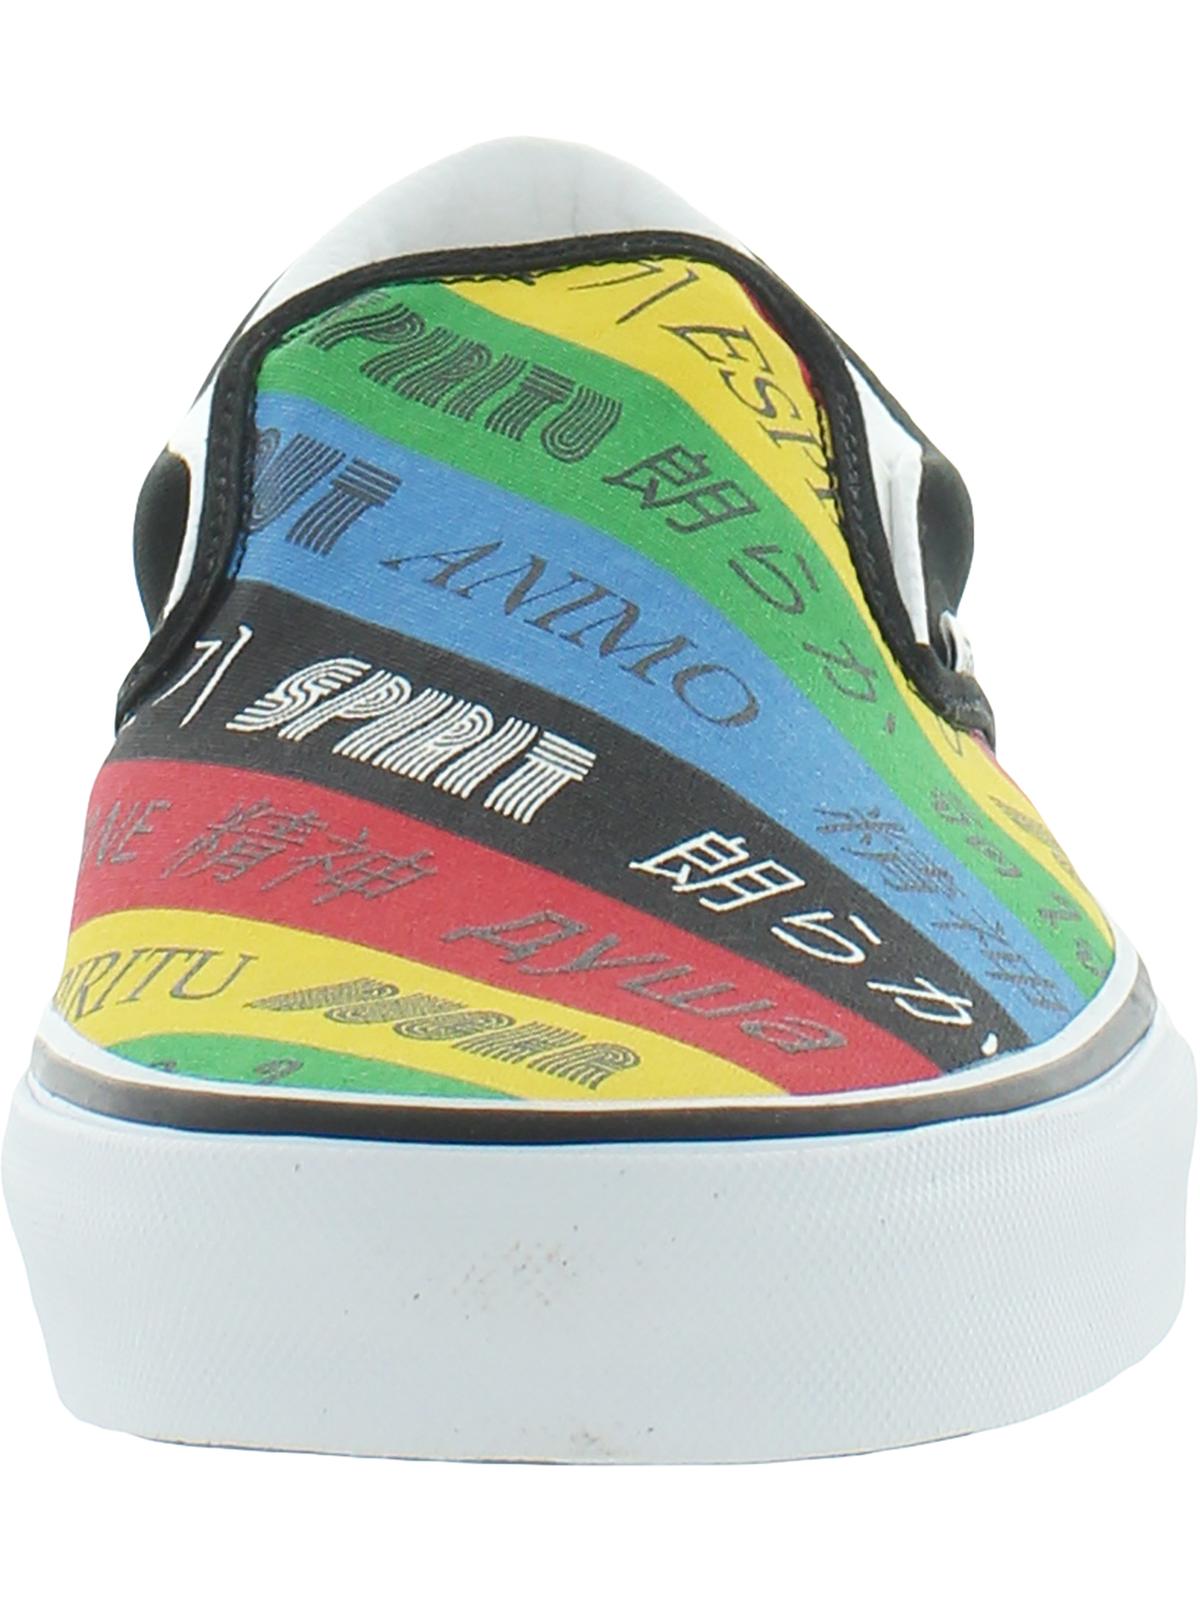 Vans Mens Classic Slip-On Lifestyle Fashion Sneakers Multi 7 Medium (D) - image 3 of 3